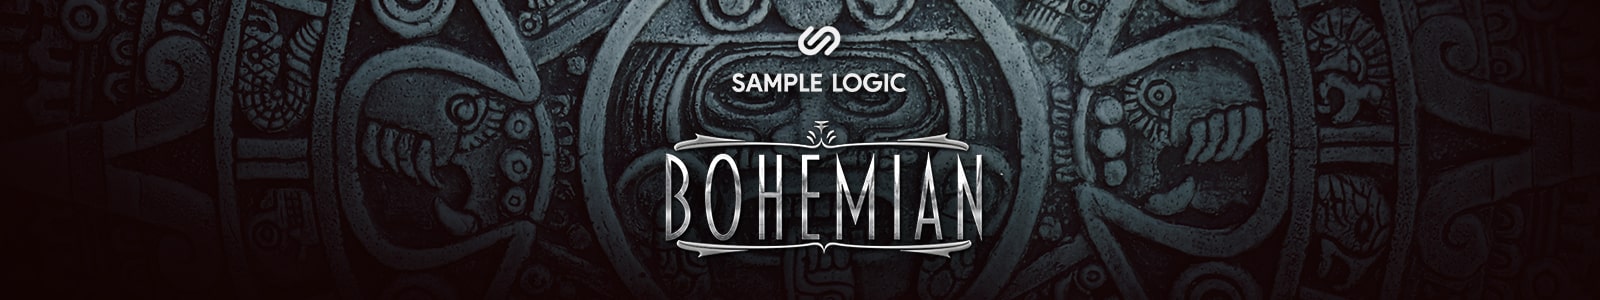 BOHEMIAN by sample logic